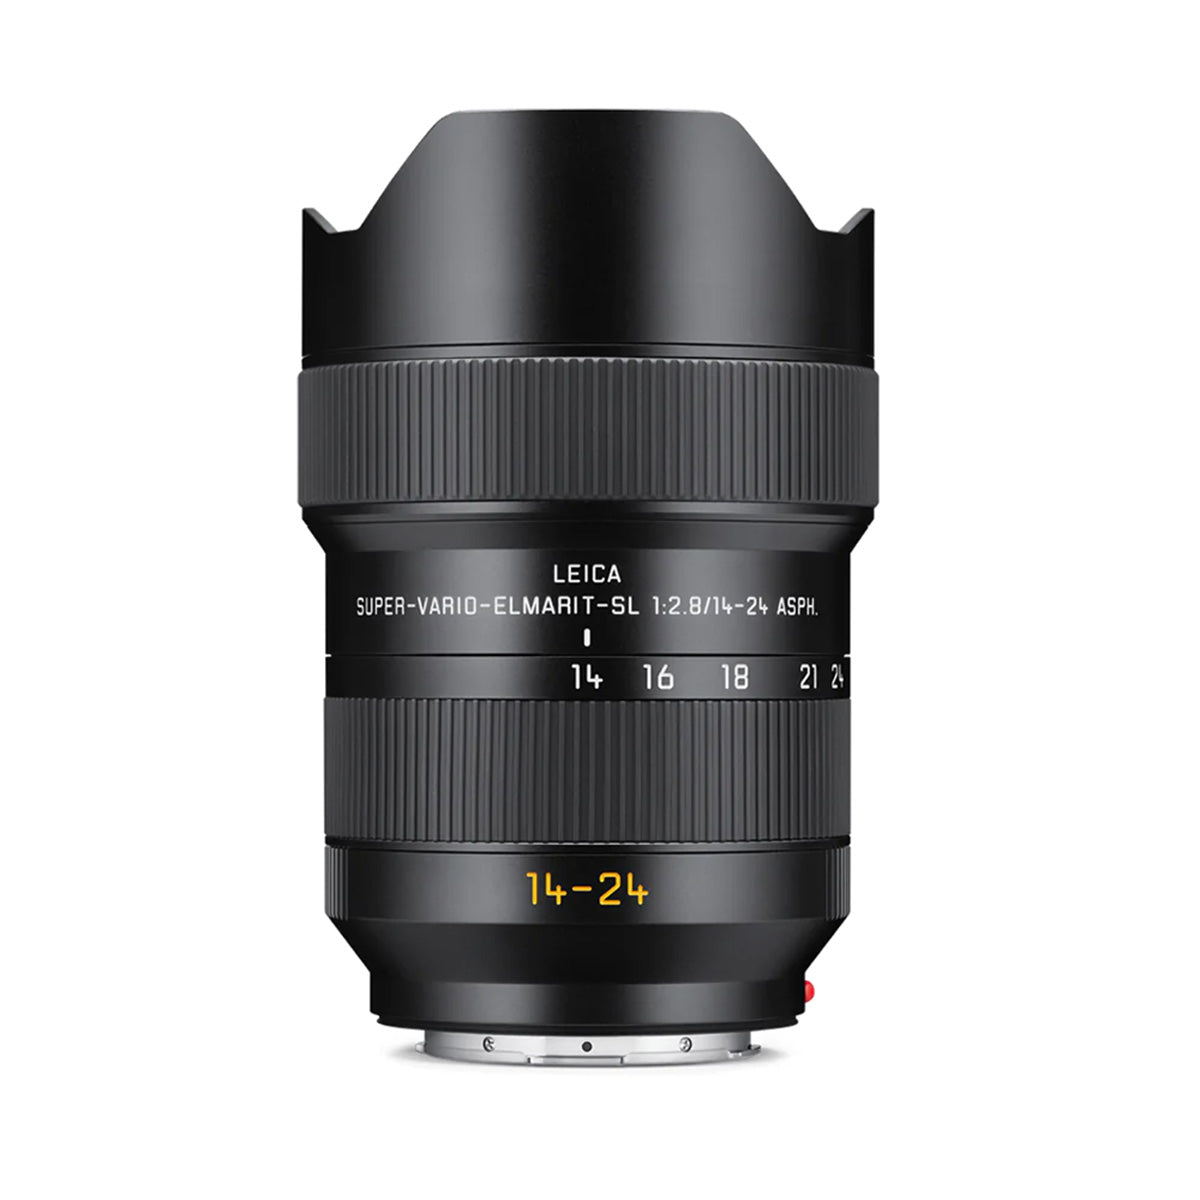 Leica Super-Vario-Elmarit-SL 14-24mm F2.8 ASPH